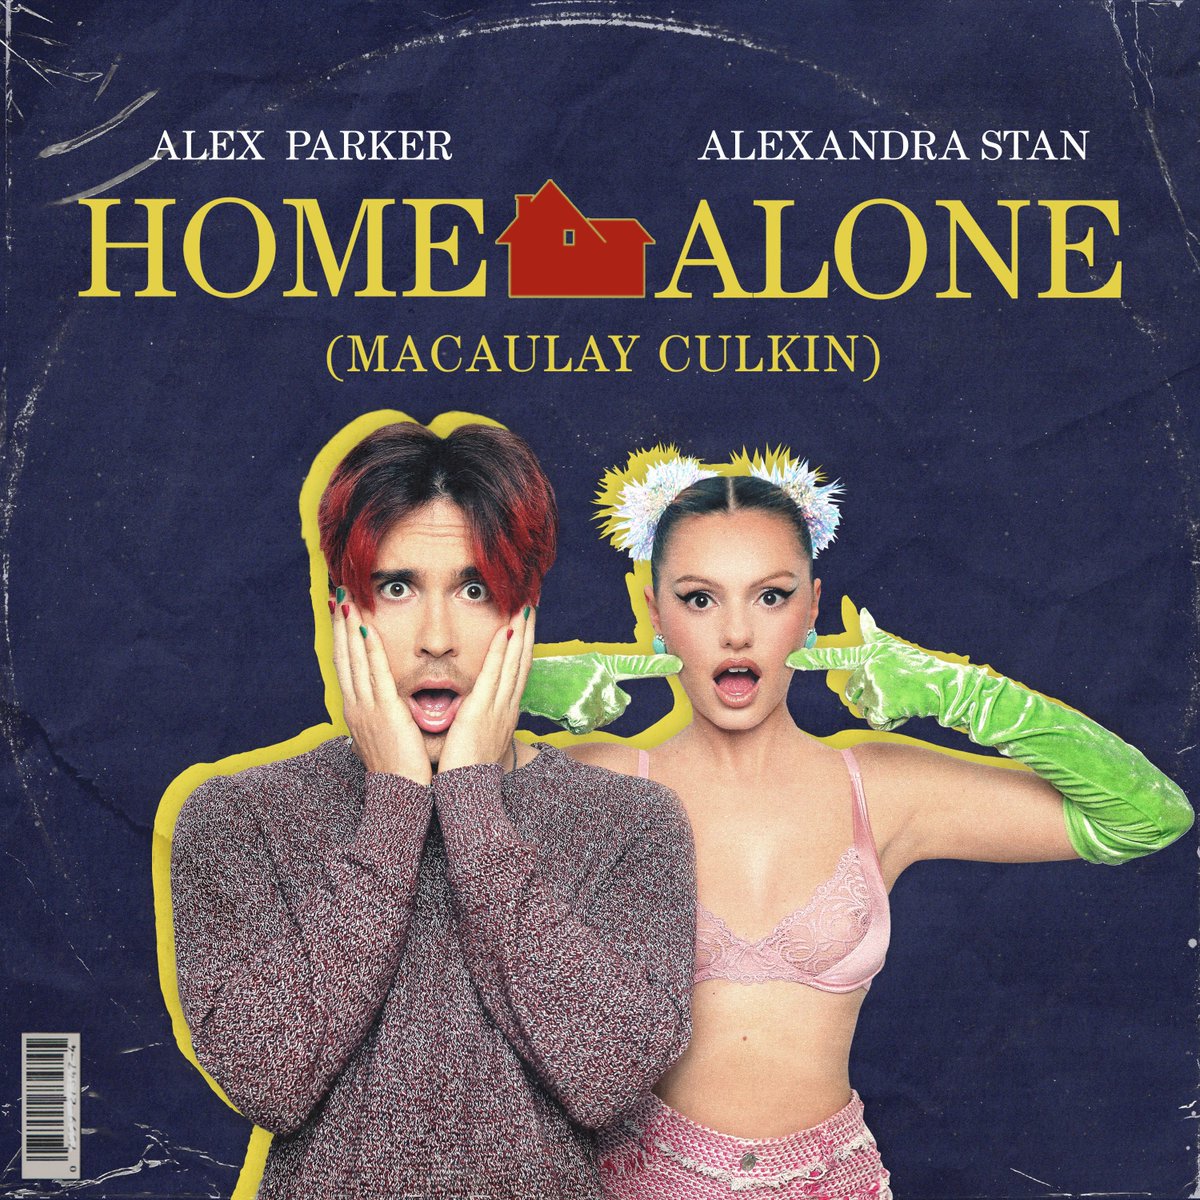 Signed to Universal Music, Romania - promo gets underway on the Alex Parker @alexparkerdj & Alexandra Stan @AlexandraStanR single 'Home Alone' (Macaulay Culkin).